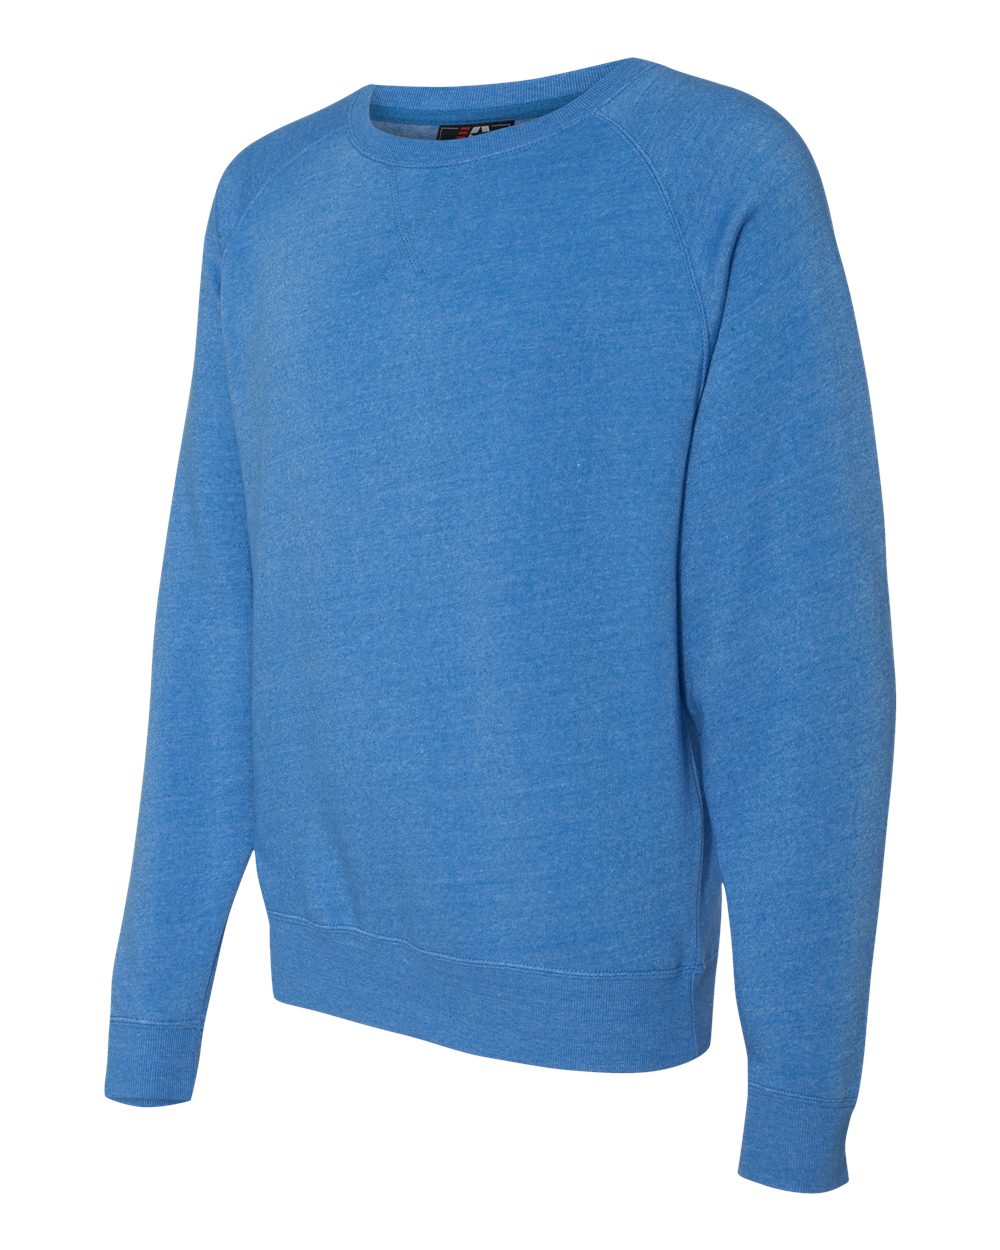 J. America Triblend Crewneck Sweatshirt - 8875 $17.44